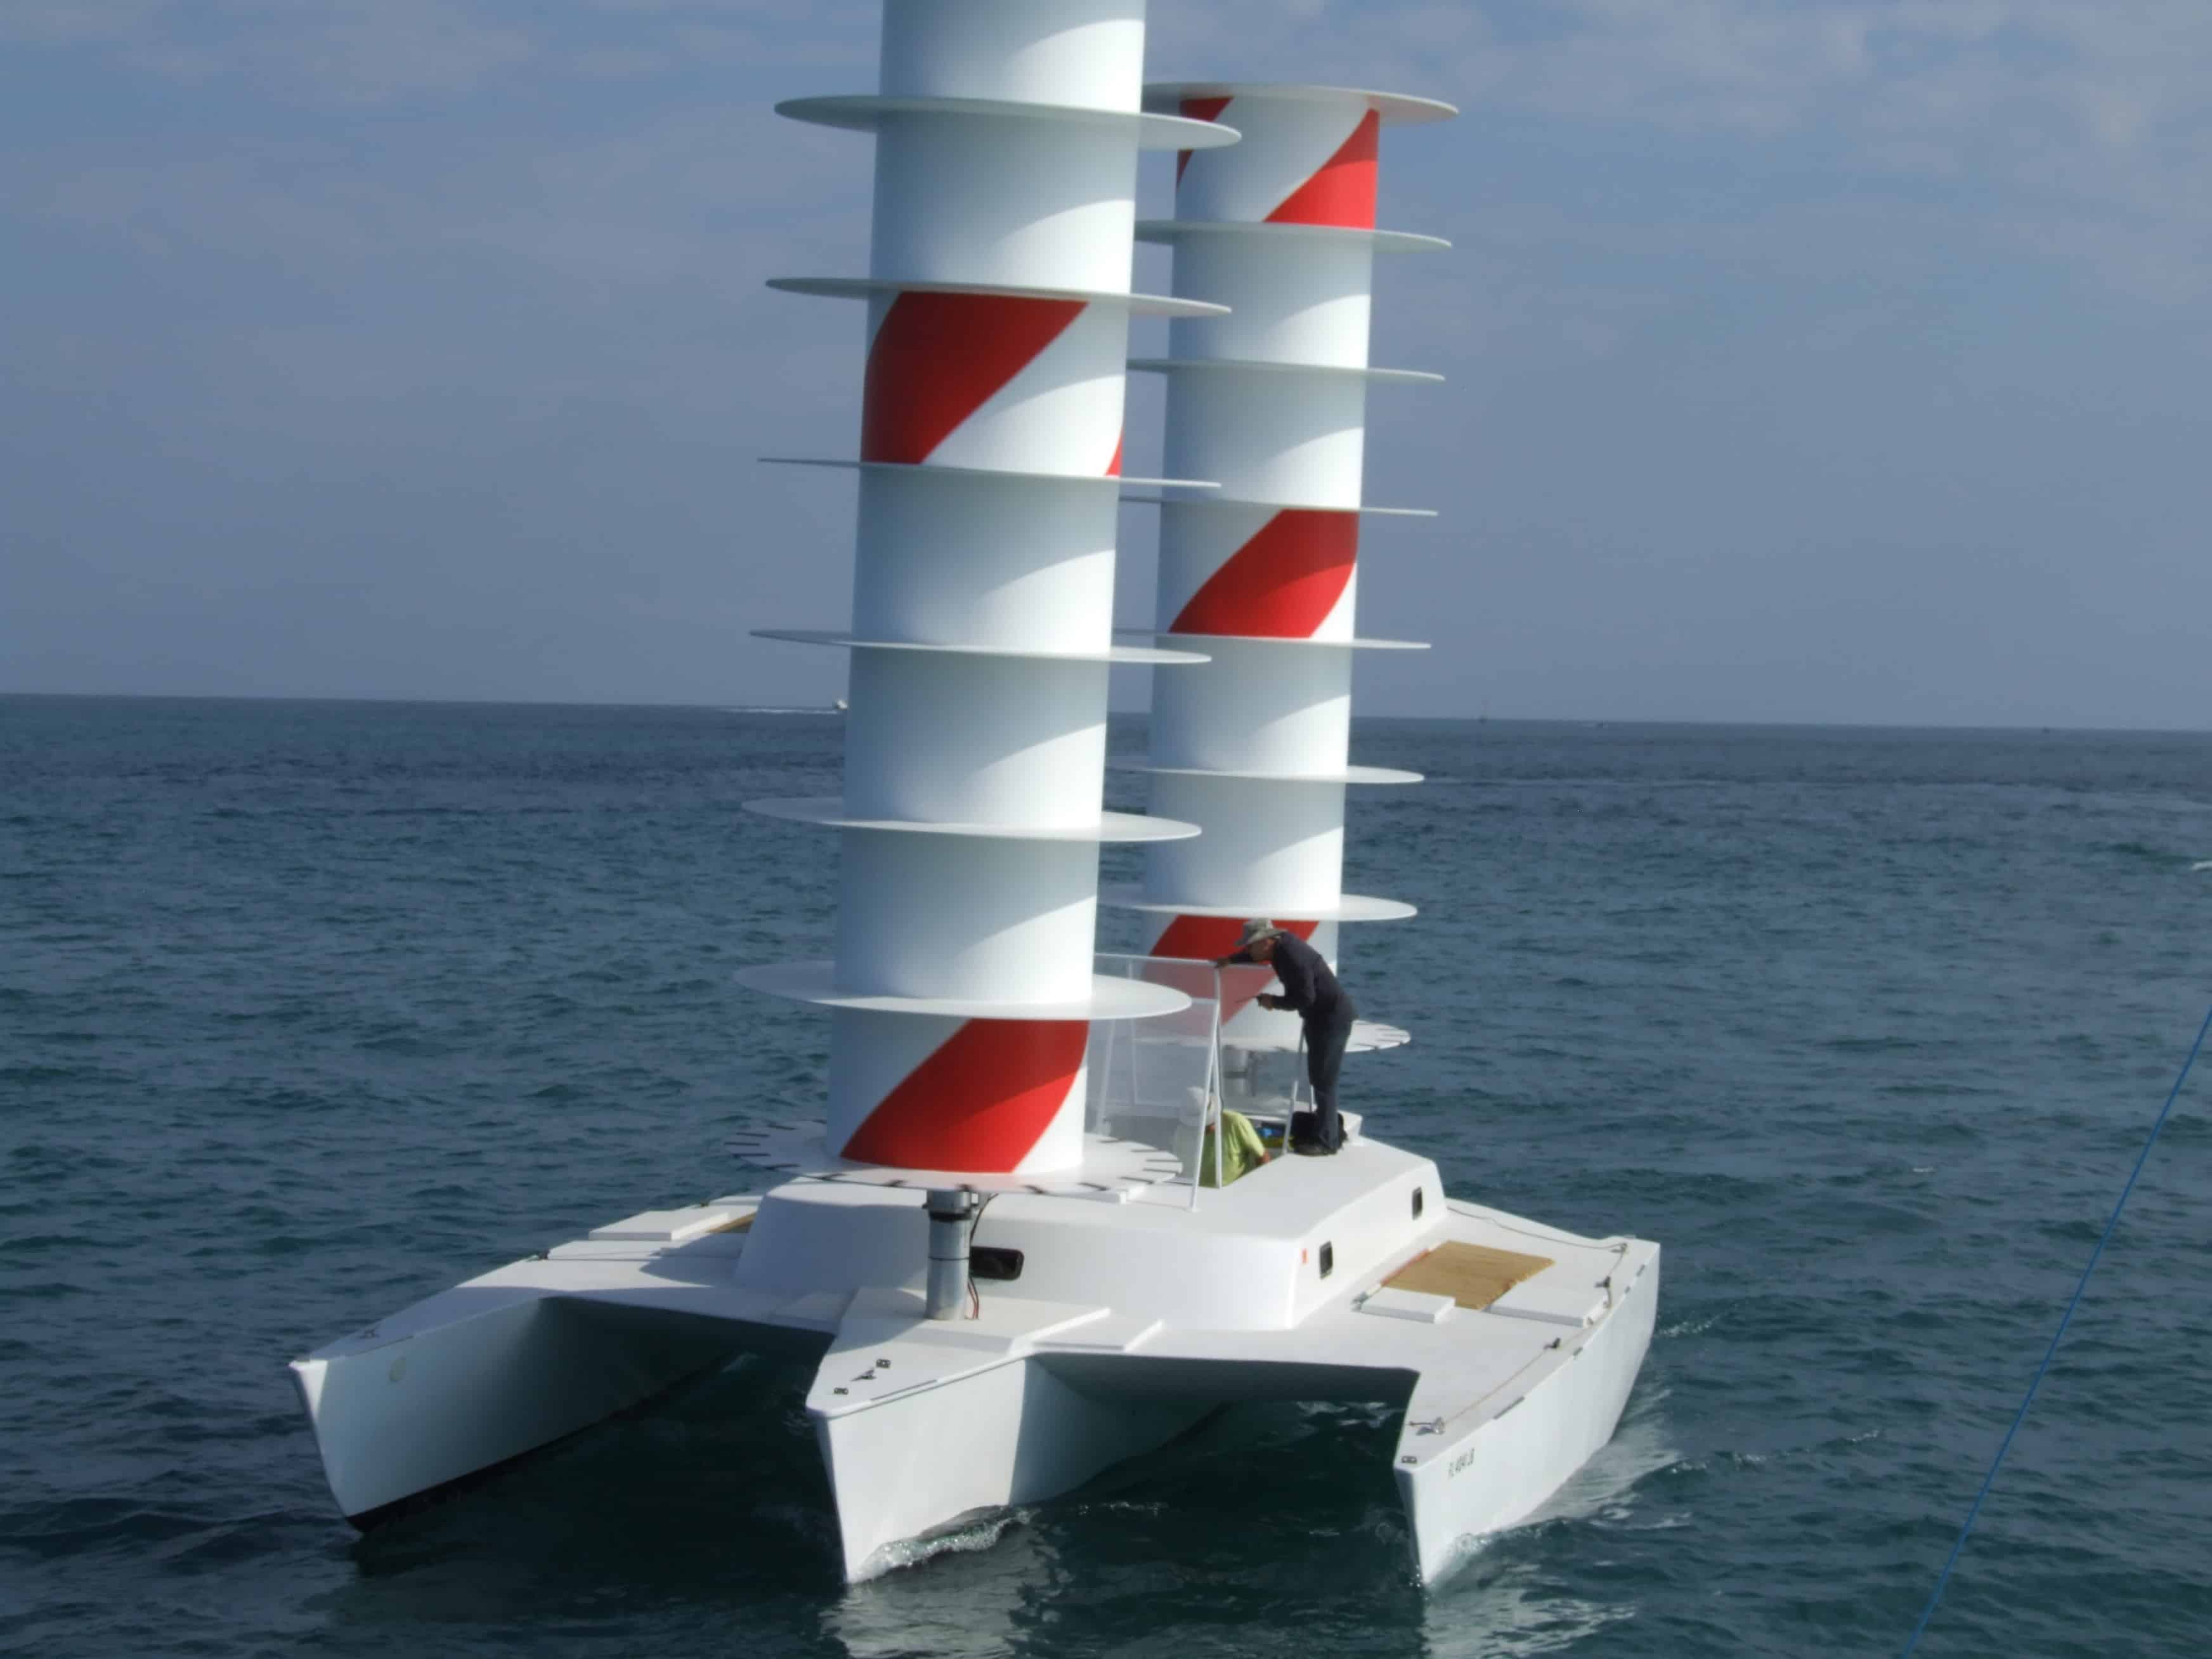 The experimental Flettner rotor craft Cloudia, developed at Edinburgh University as part of Stephen Salter's geoengineering project